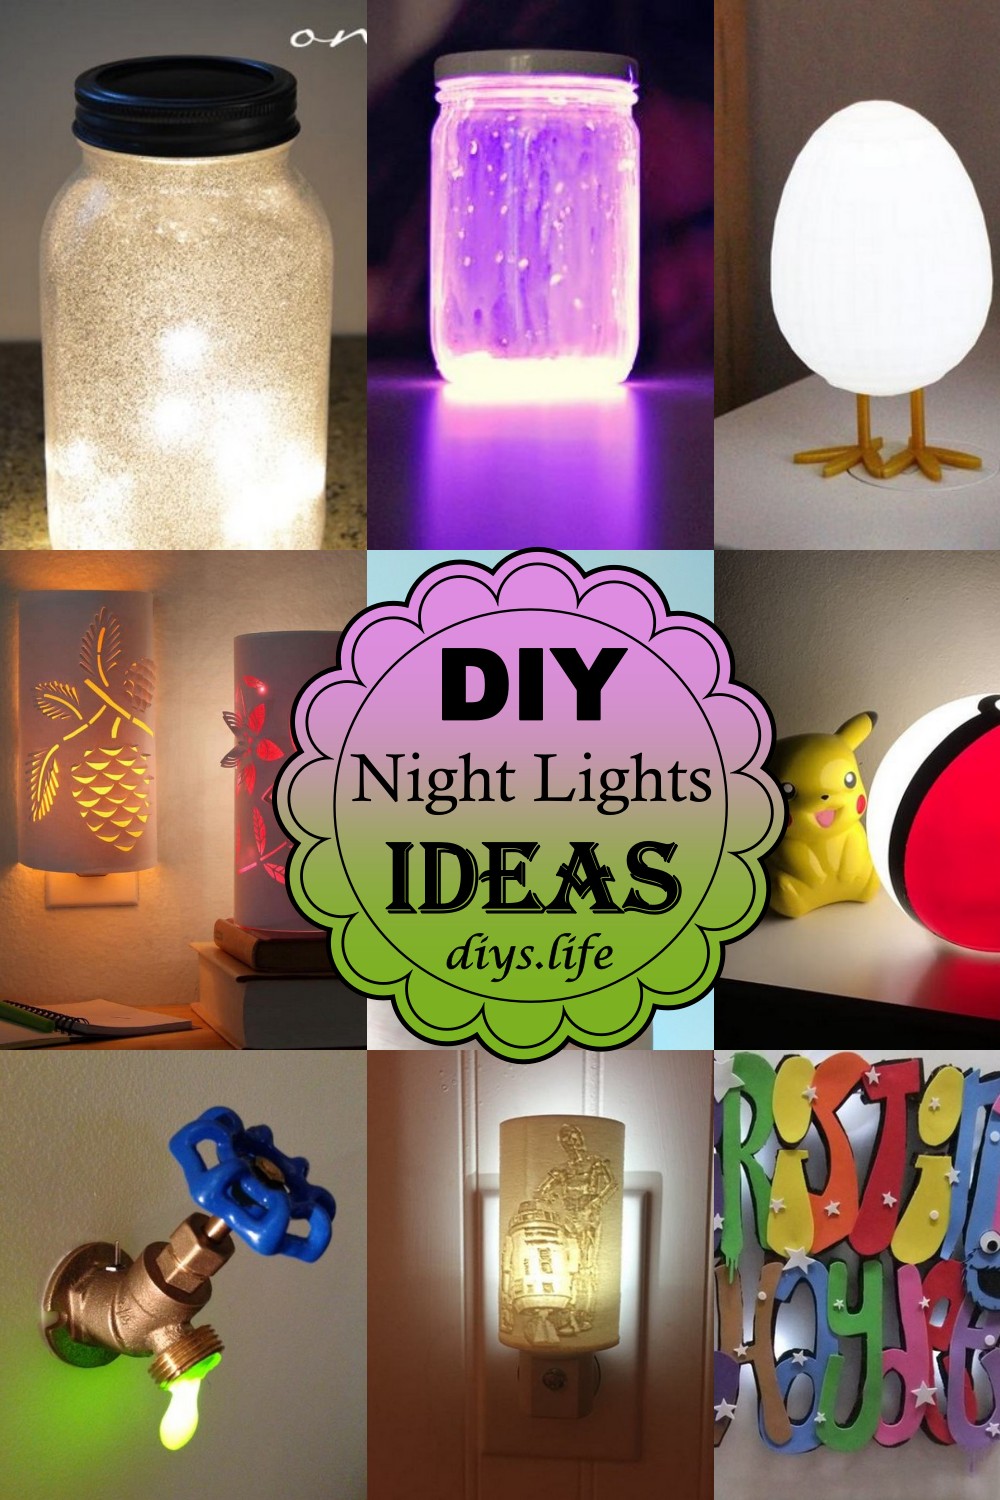 DIY Night Lights Ideas